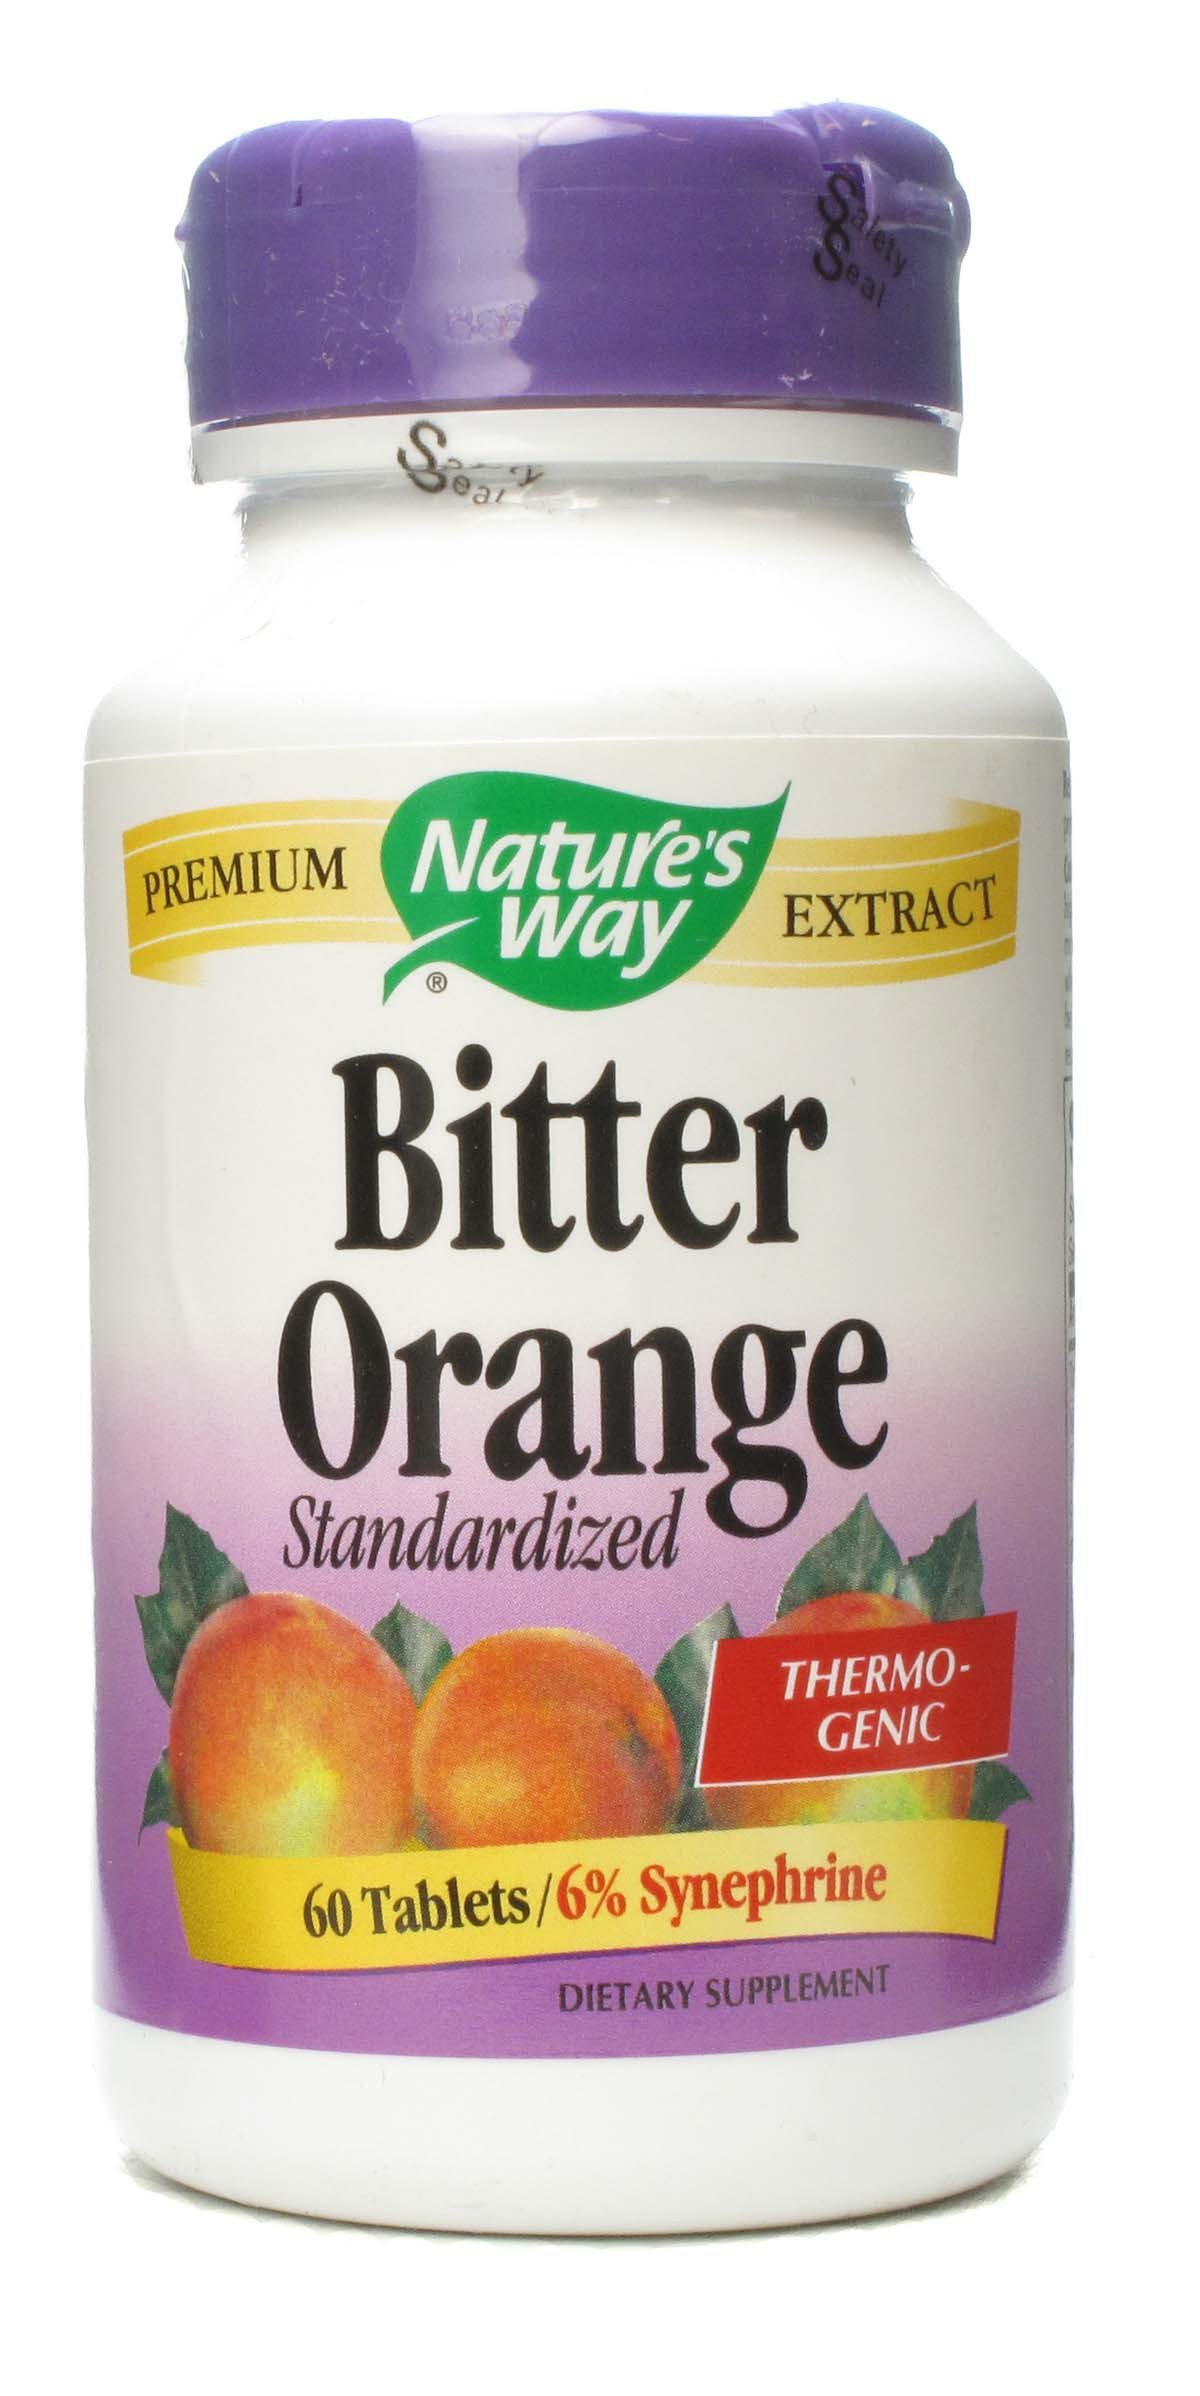 Bitter orange supplements for mood enhancement